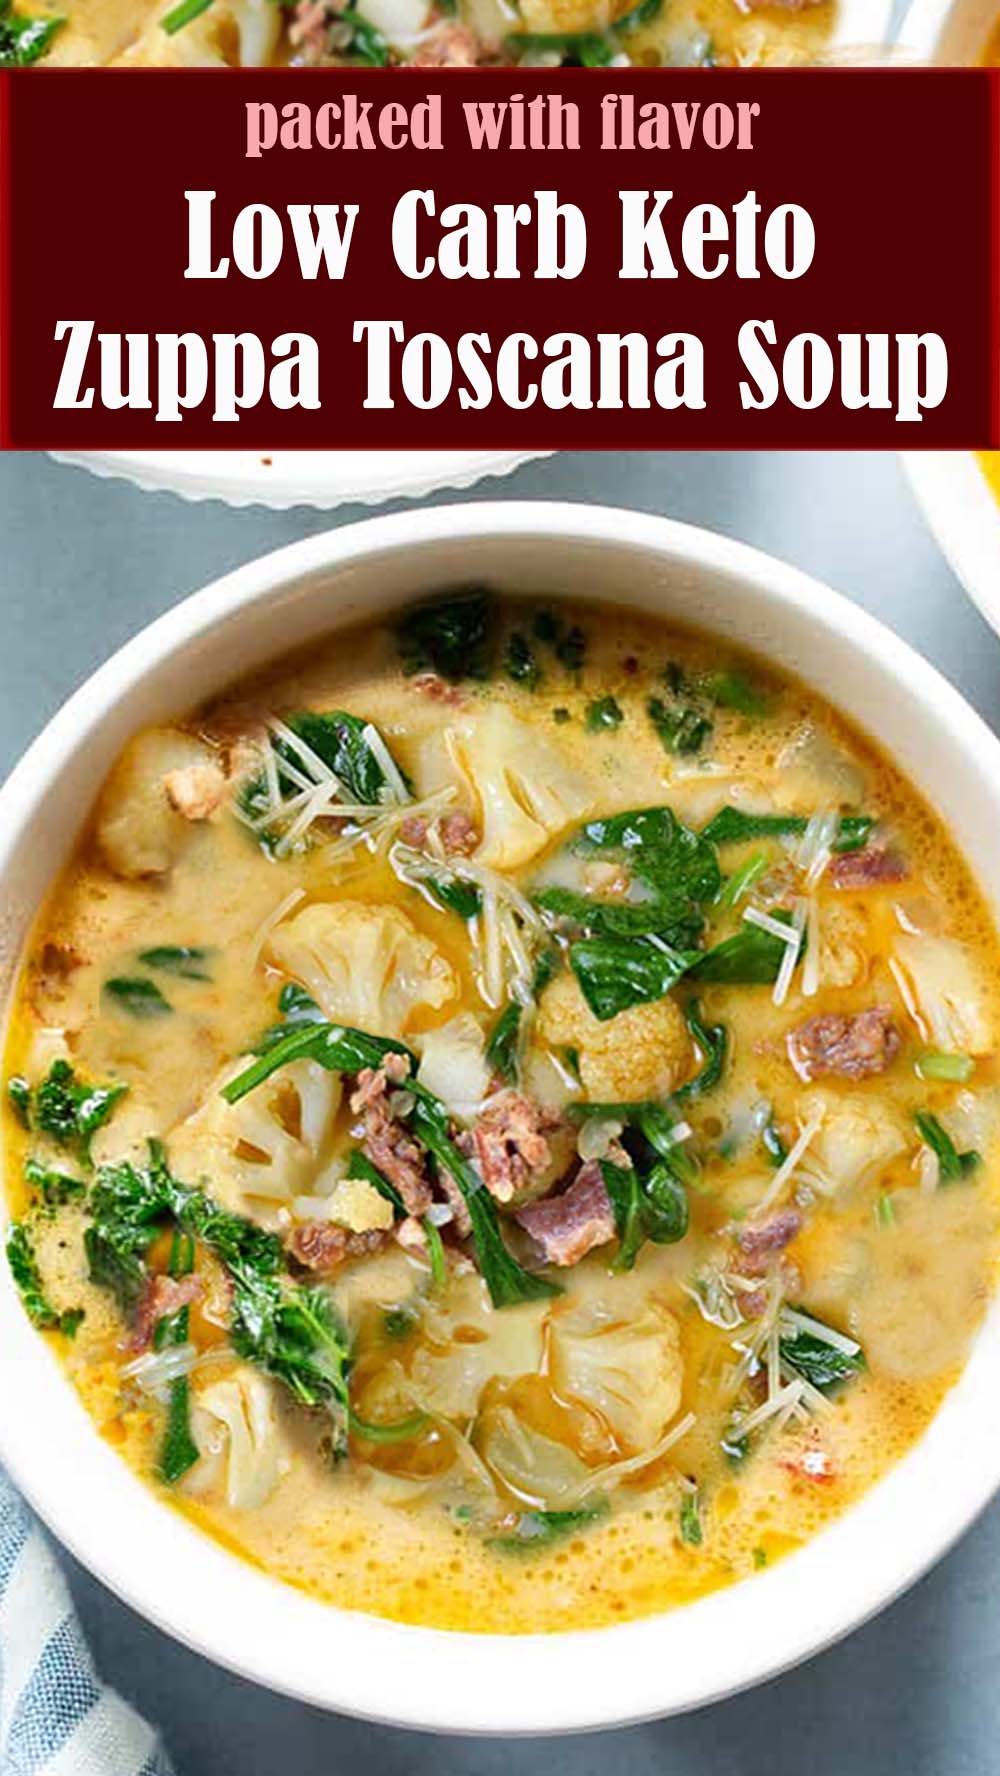 Low Carb Keto Zuppa Toscana Soup Recipe